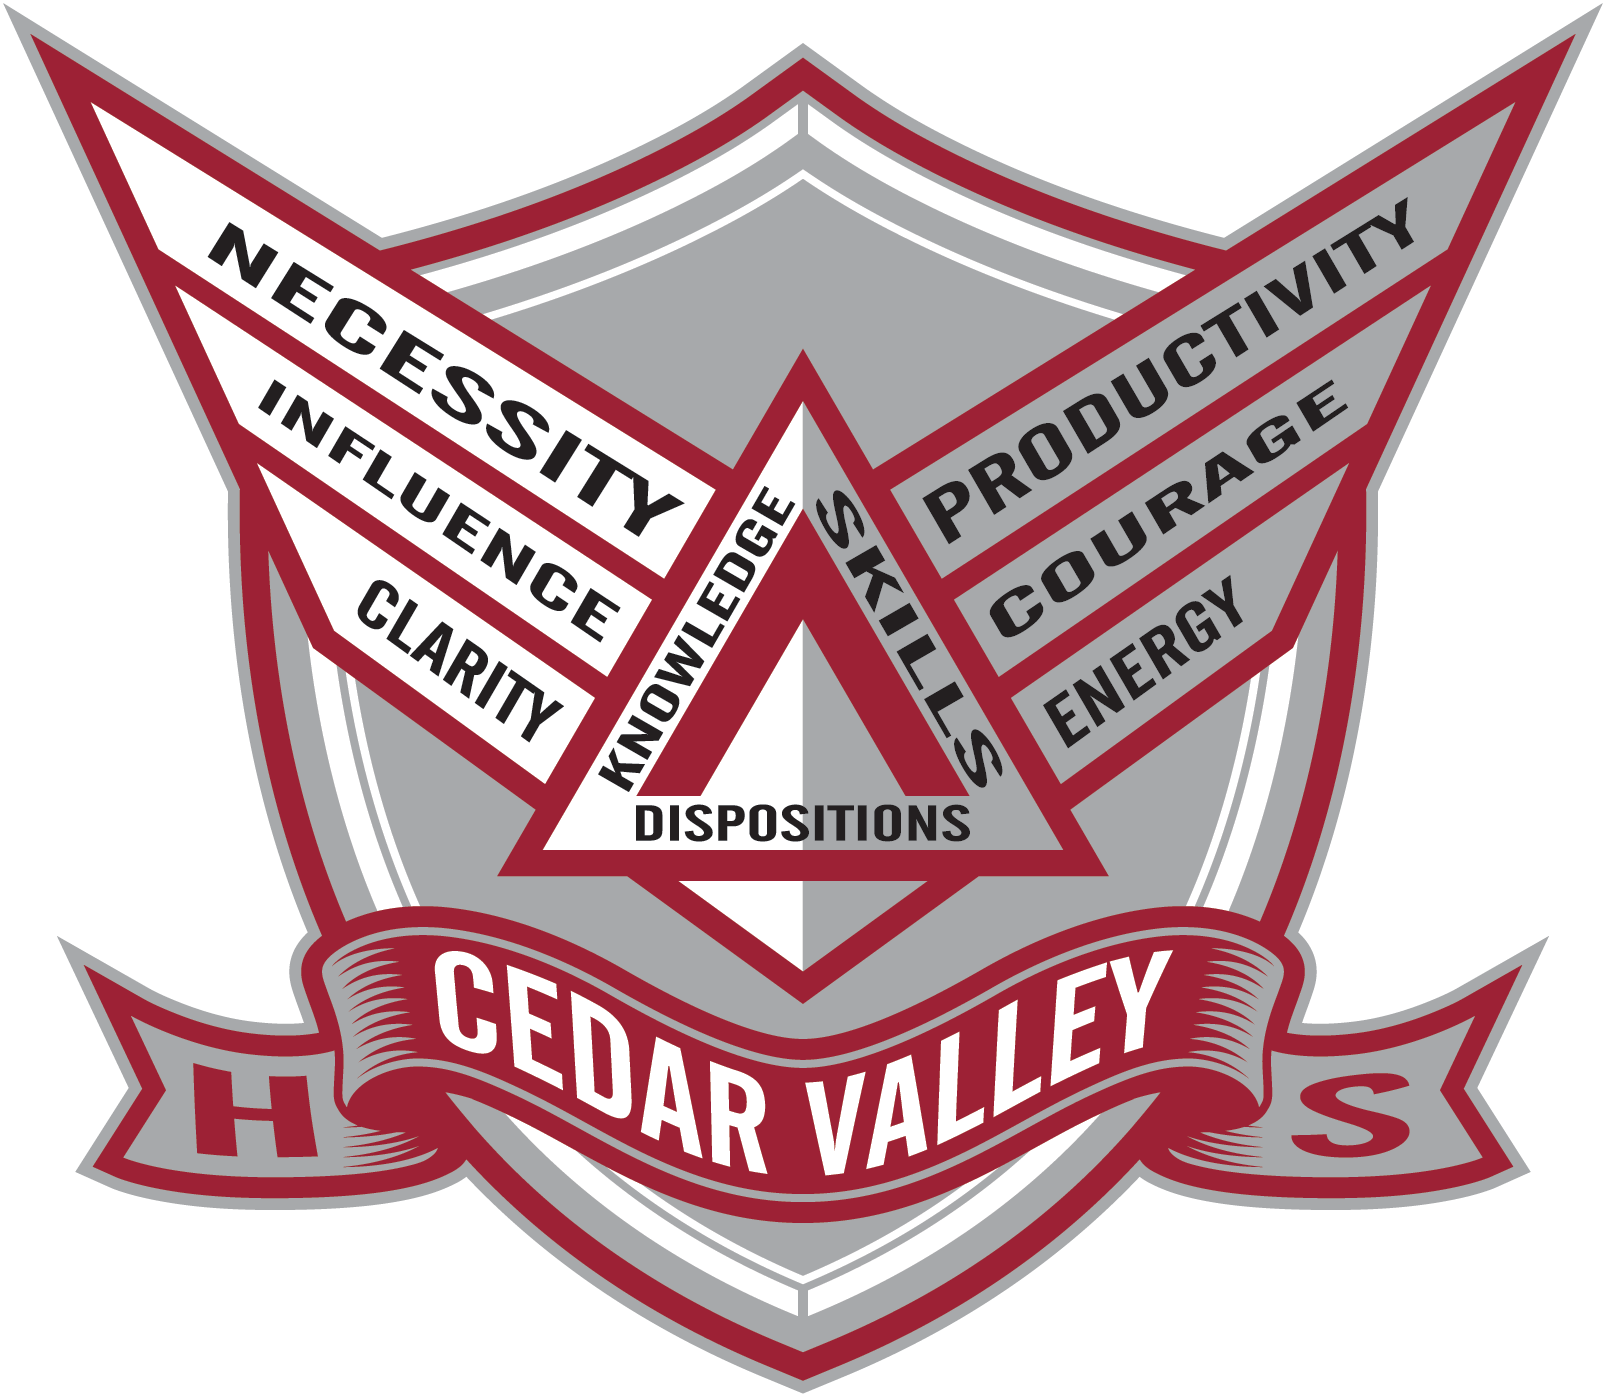 Cedar Valley High School